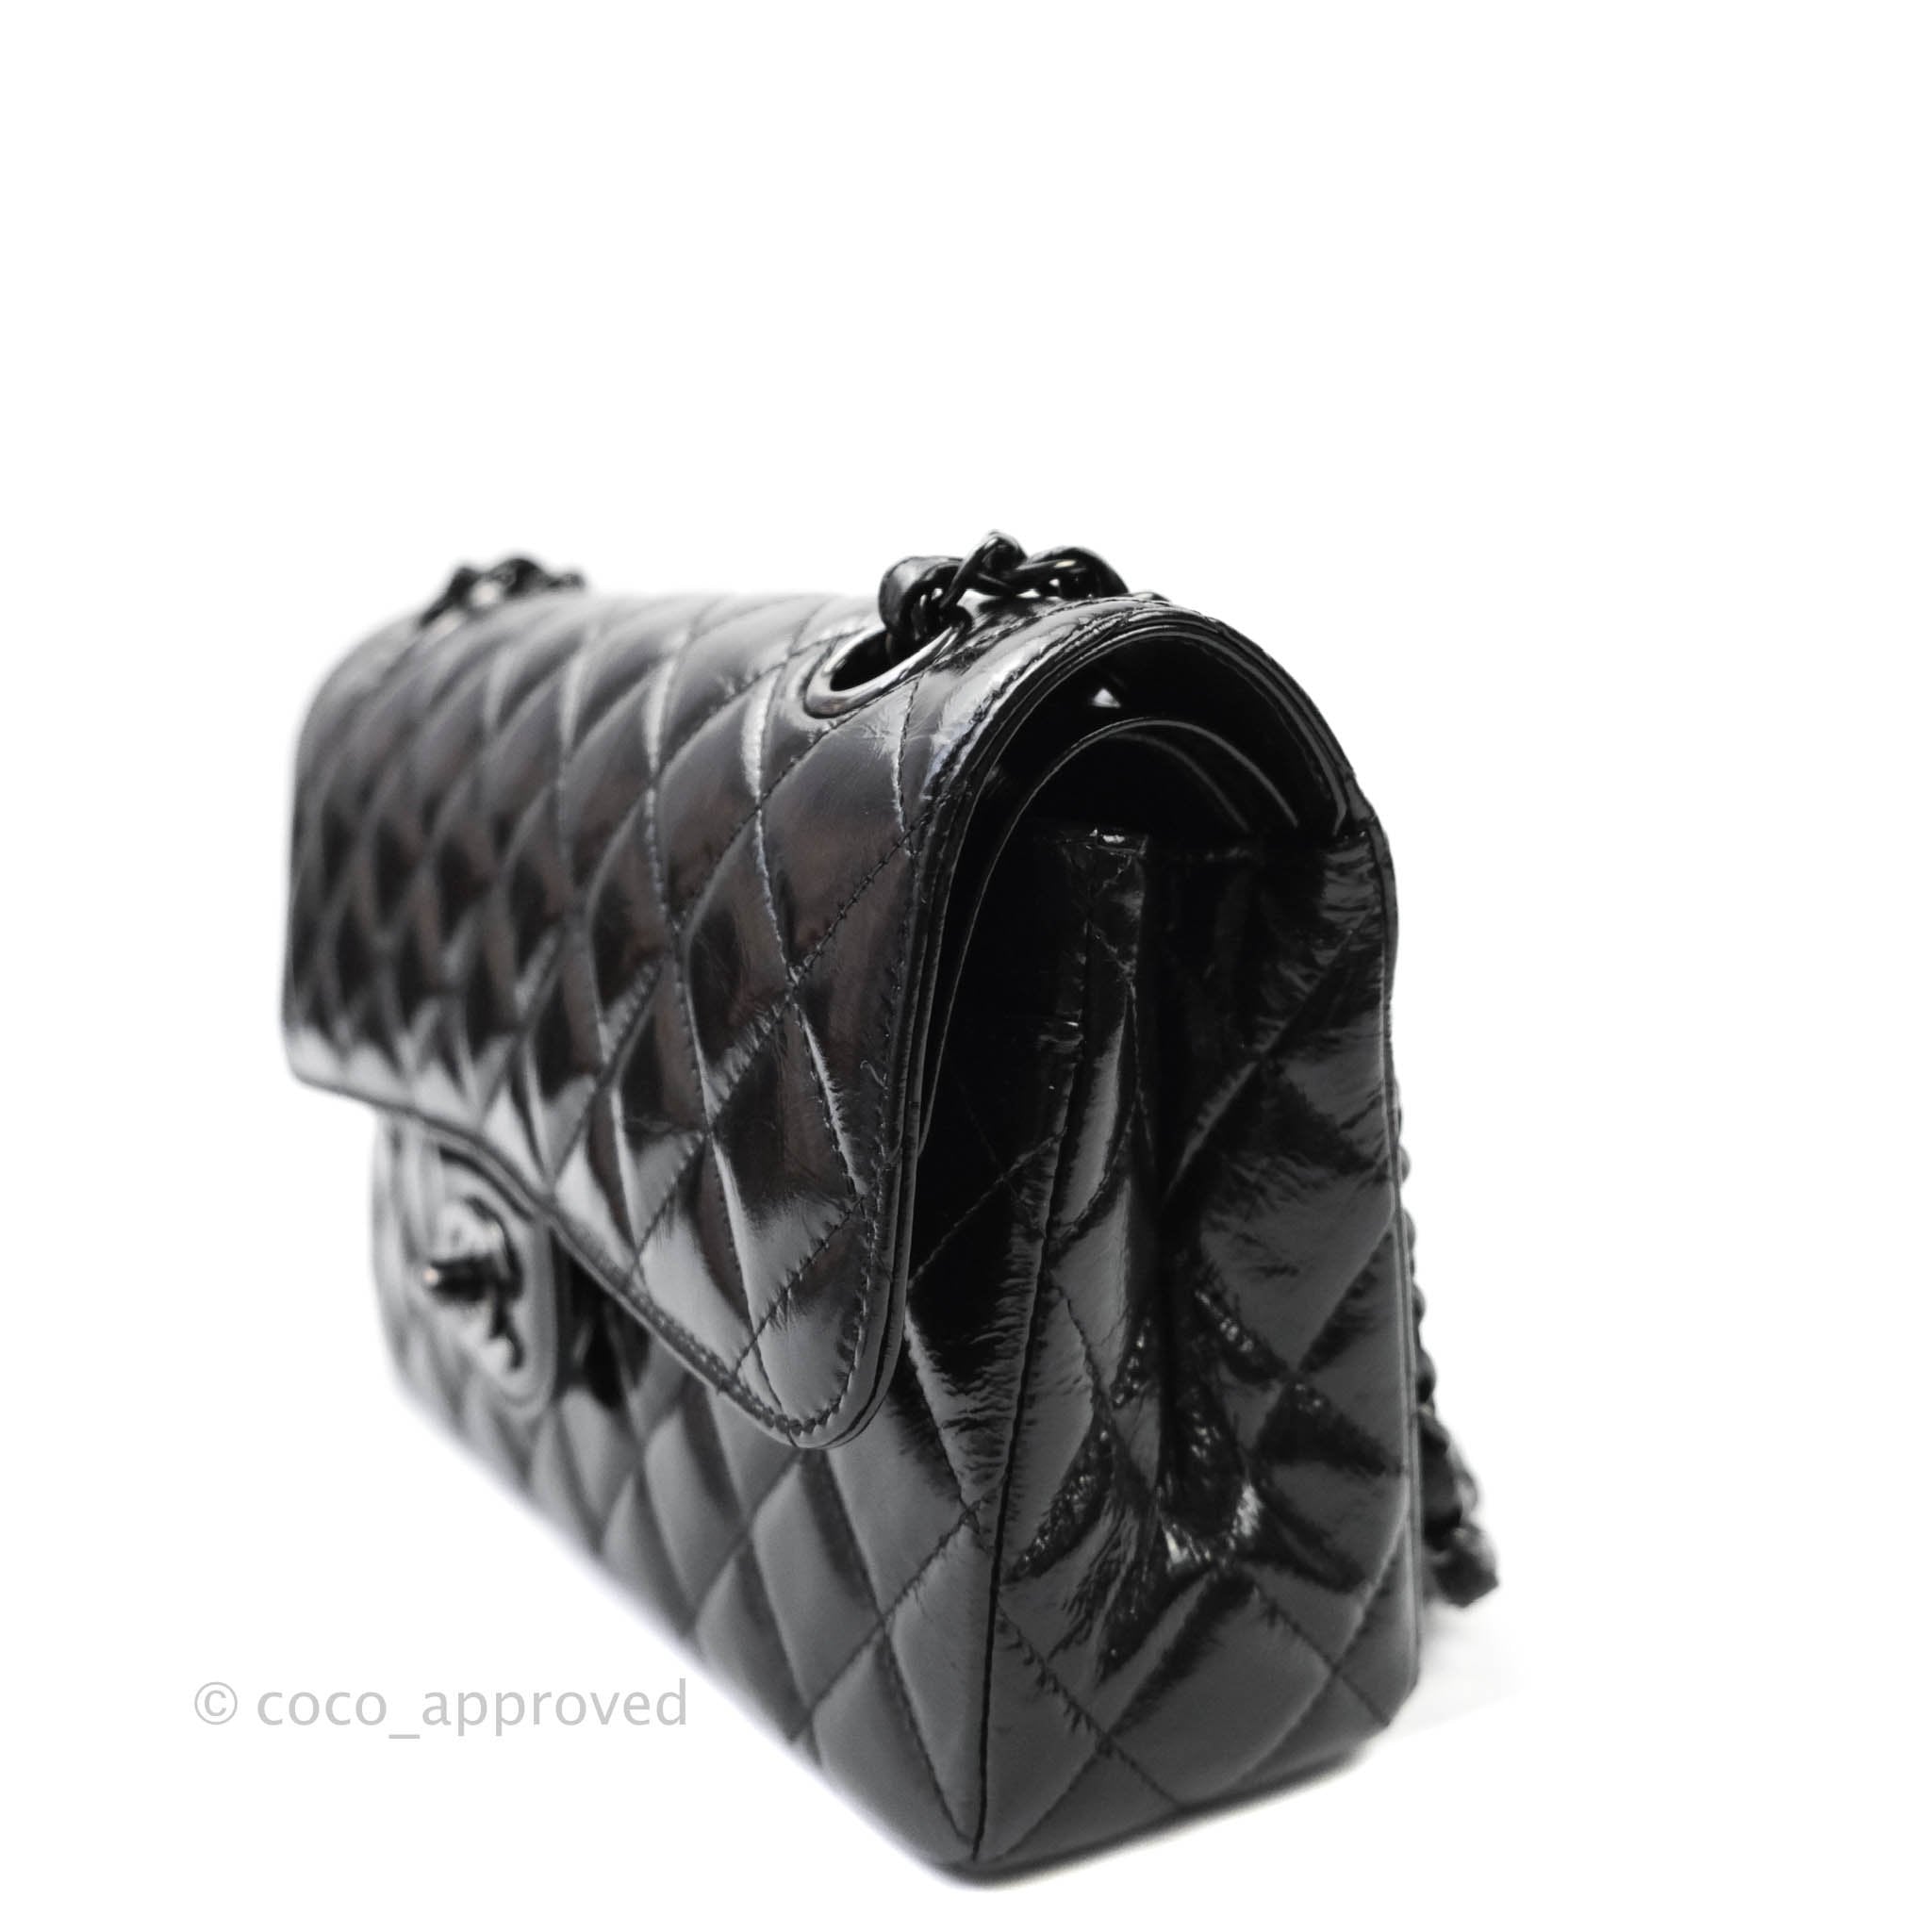 Chanel Matelasse Small Classic Handbag, Black